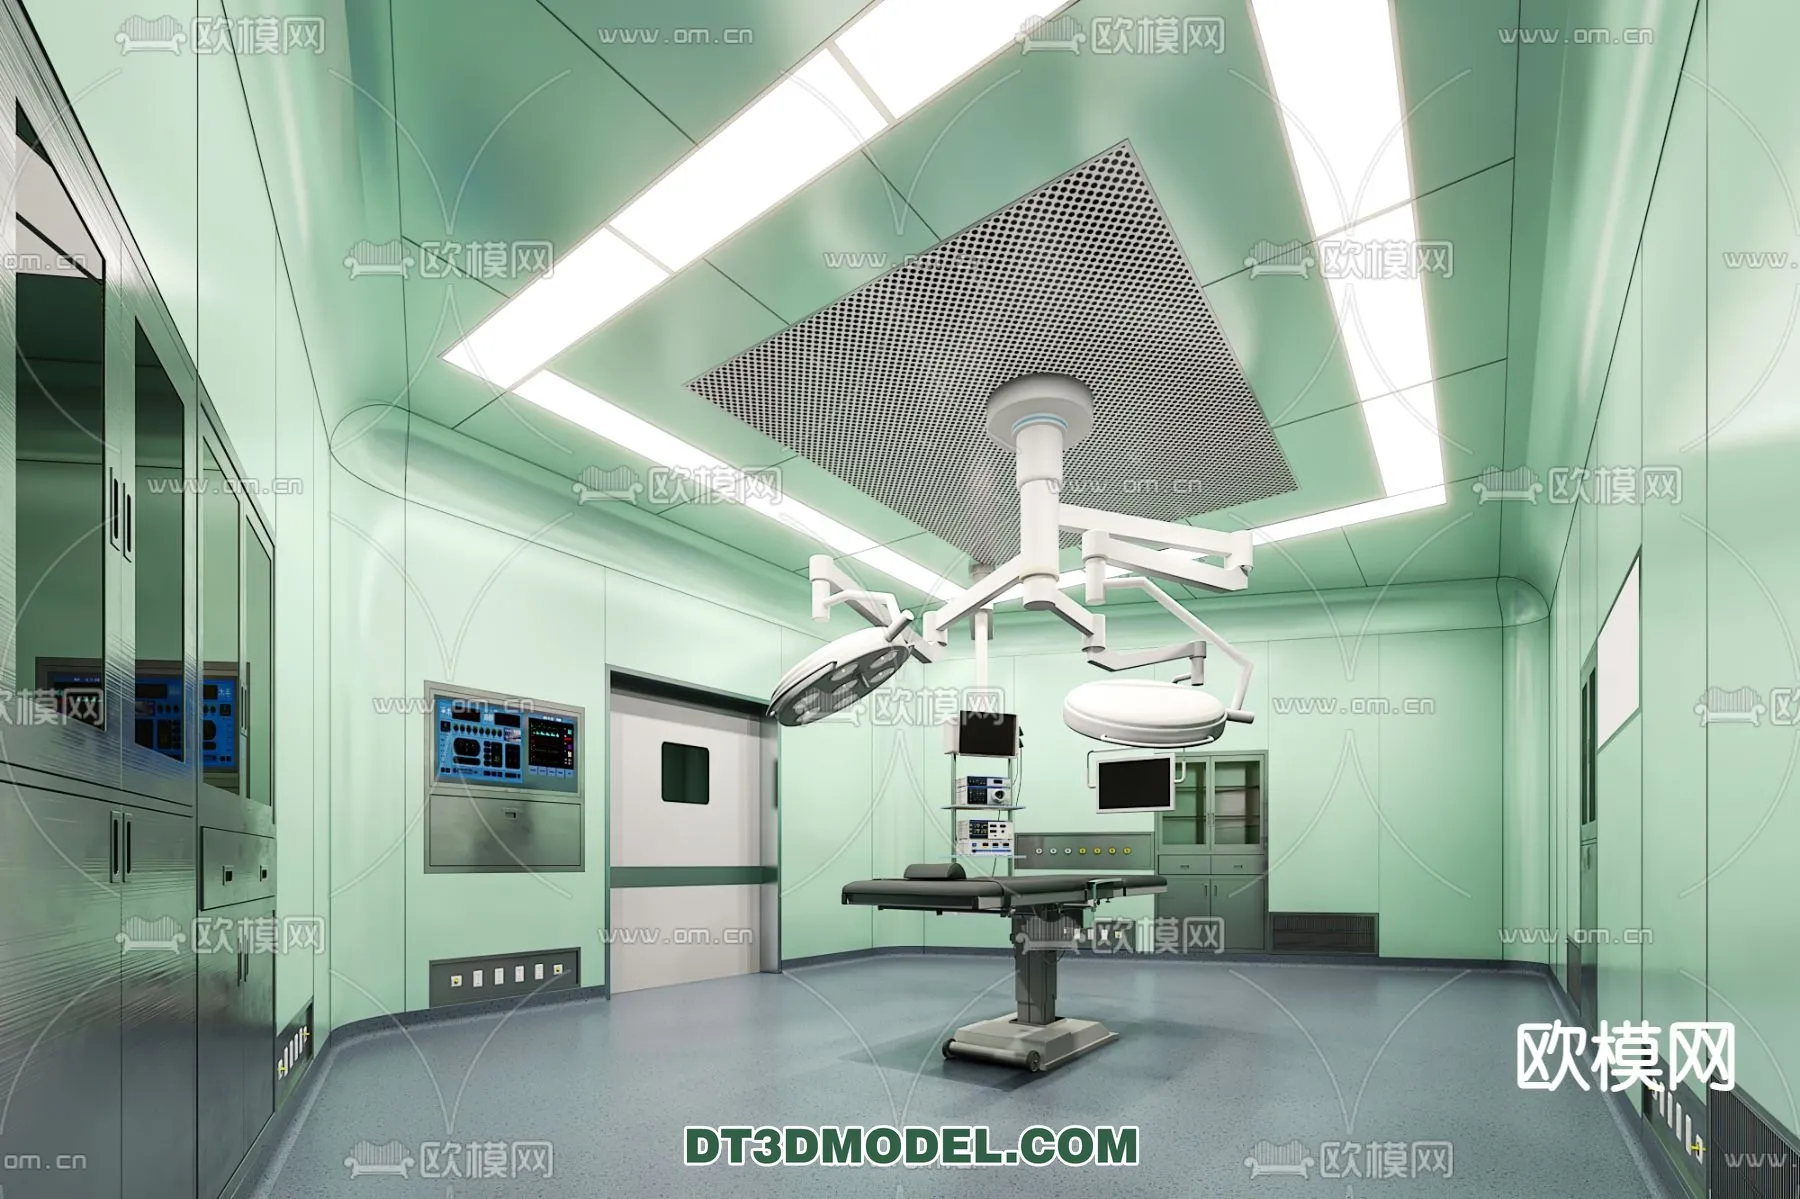 HOSPITAL 3D SCENES – MODERN – 0134